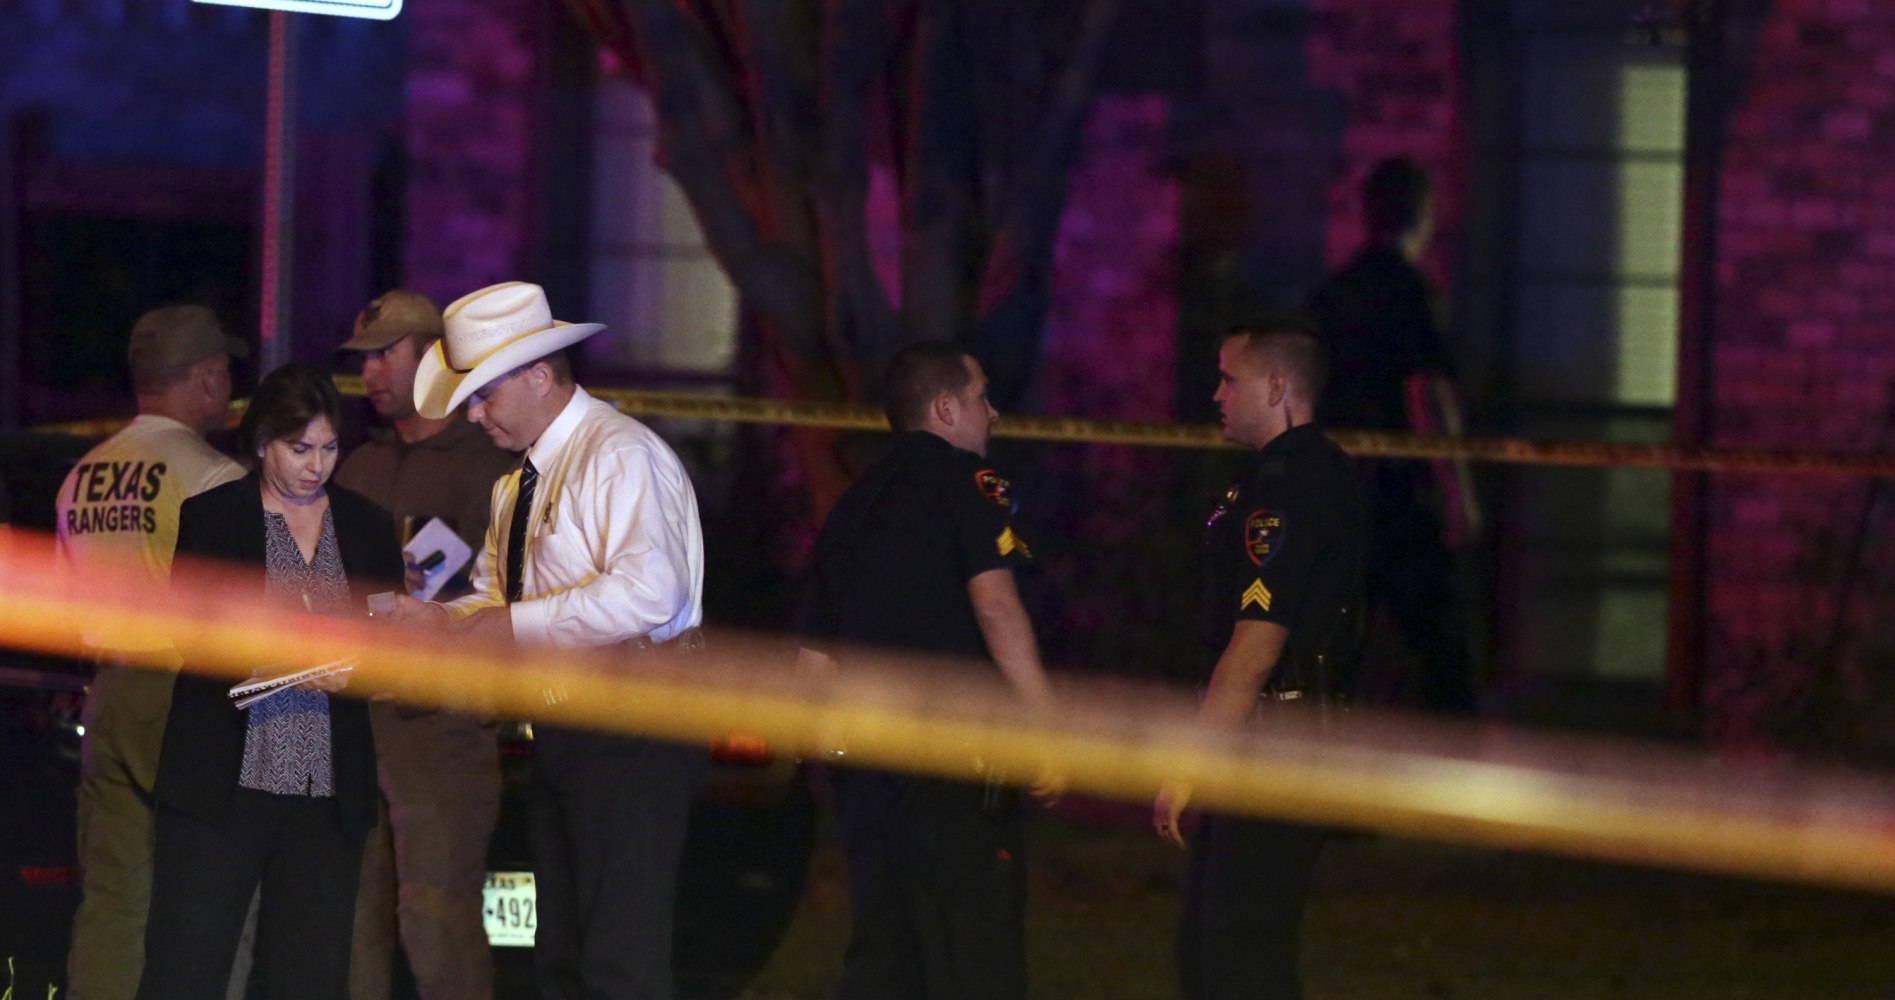 Plano, Texas, Shooting Leaves 8 Dead, Including Suspect - NBC News